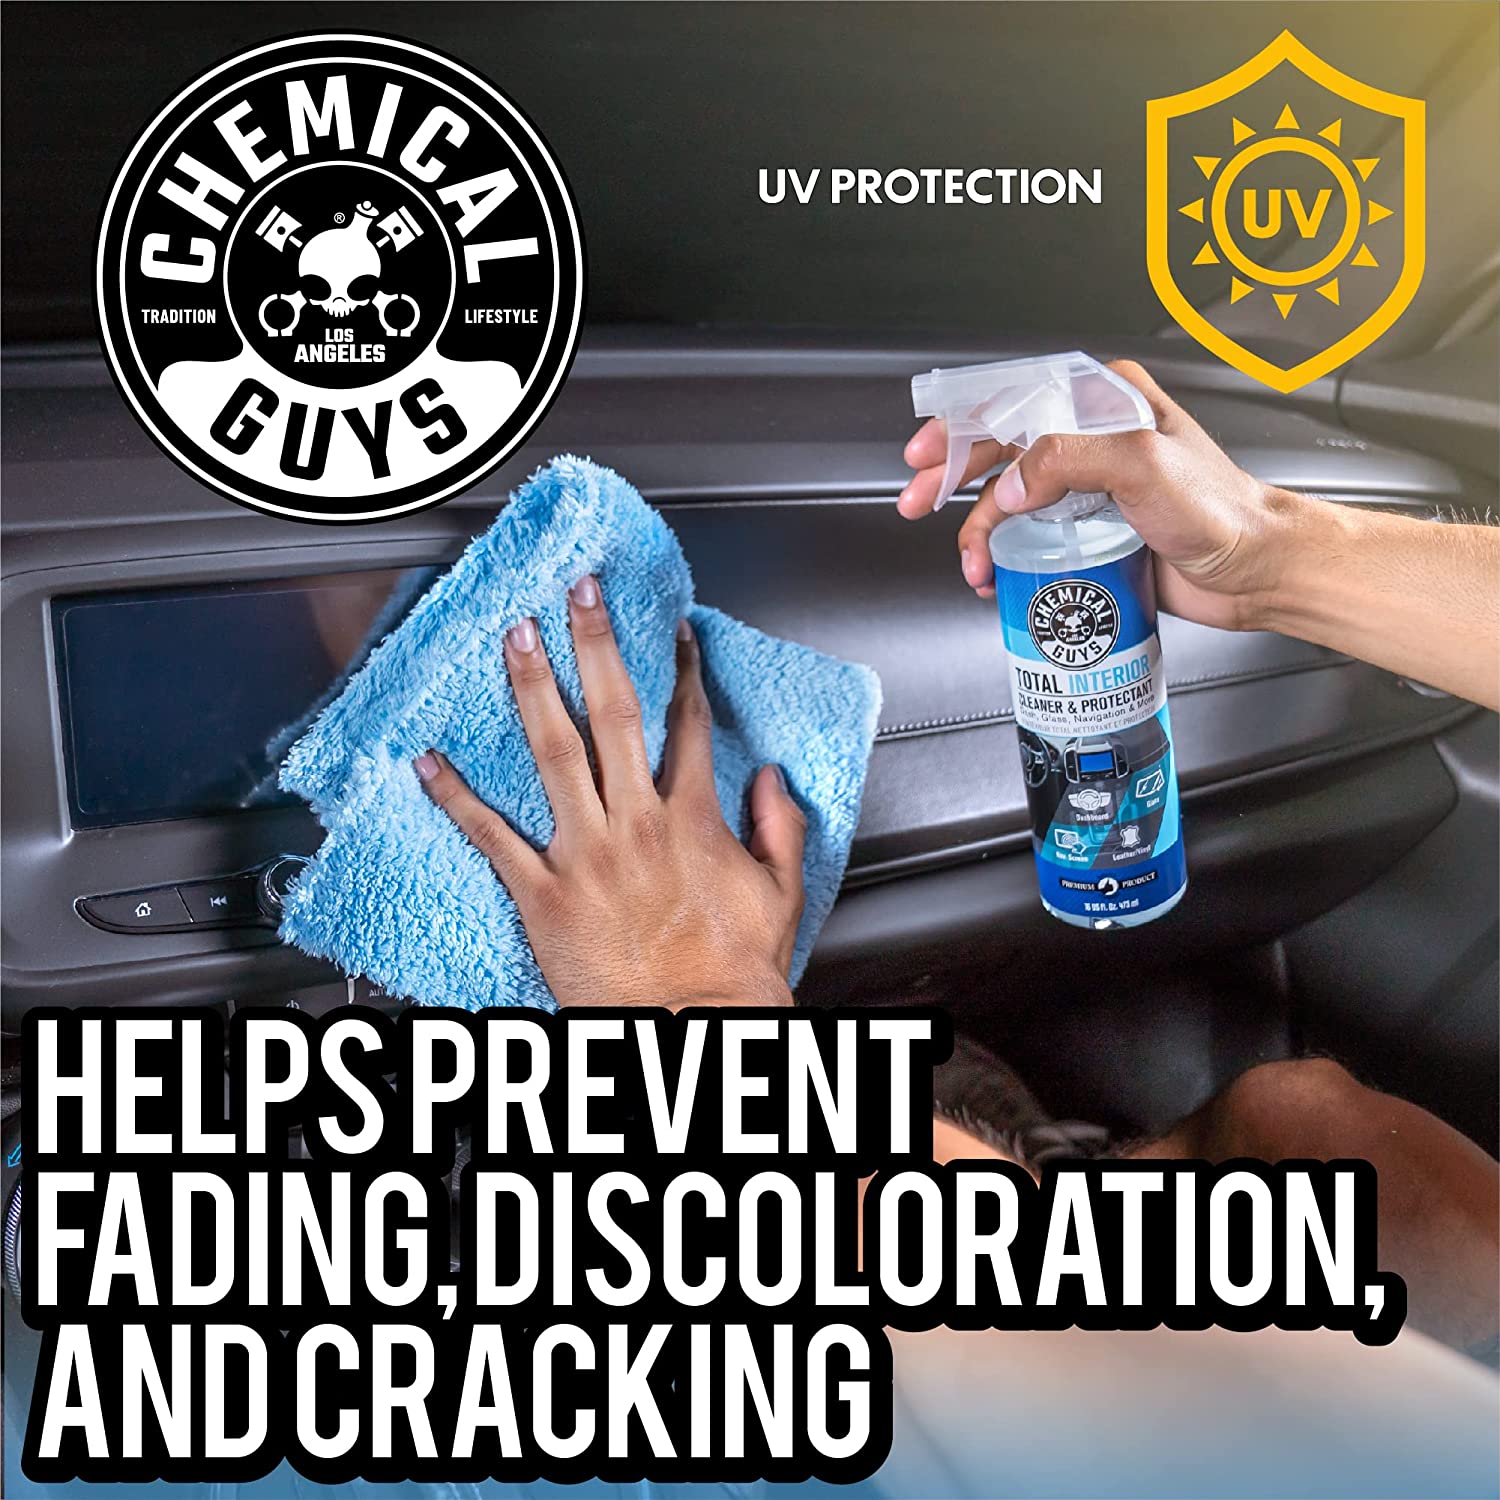 Chemical Guys HOL357 Clean & Shine Car Wash Starter Kit – Safe for